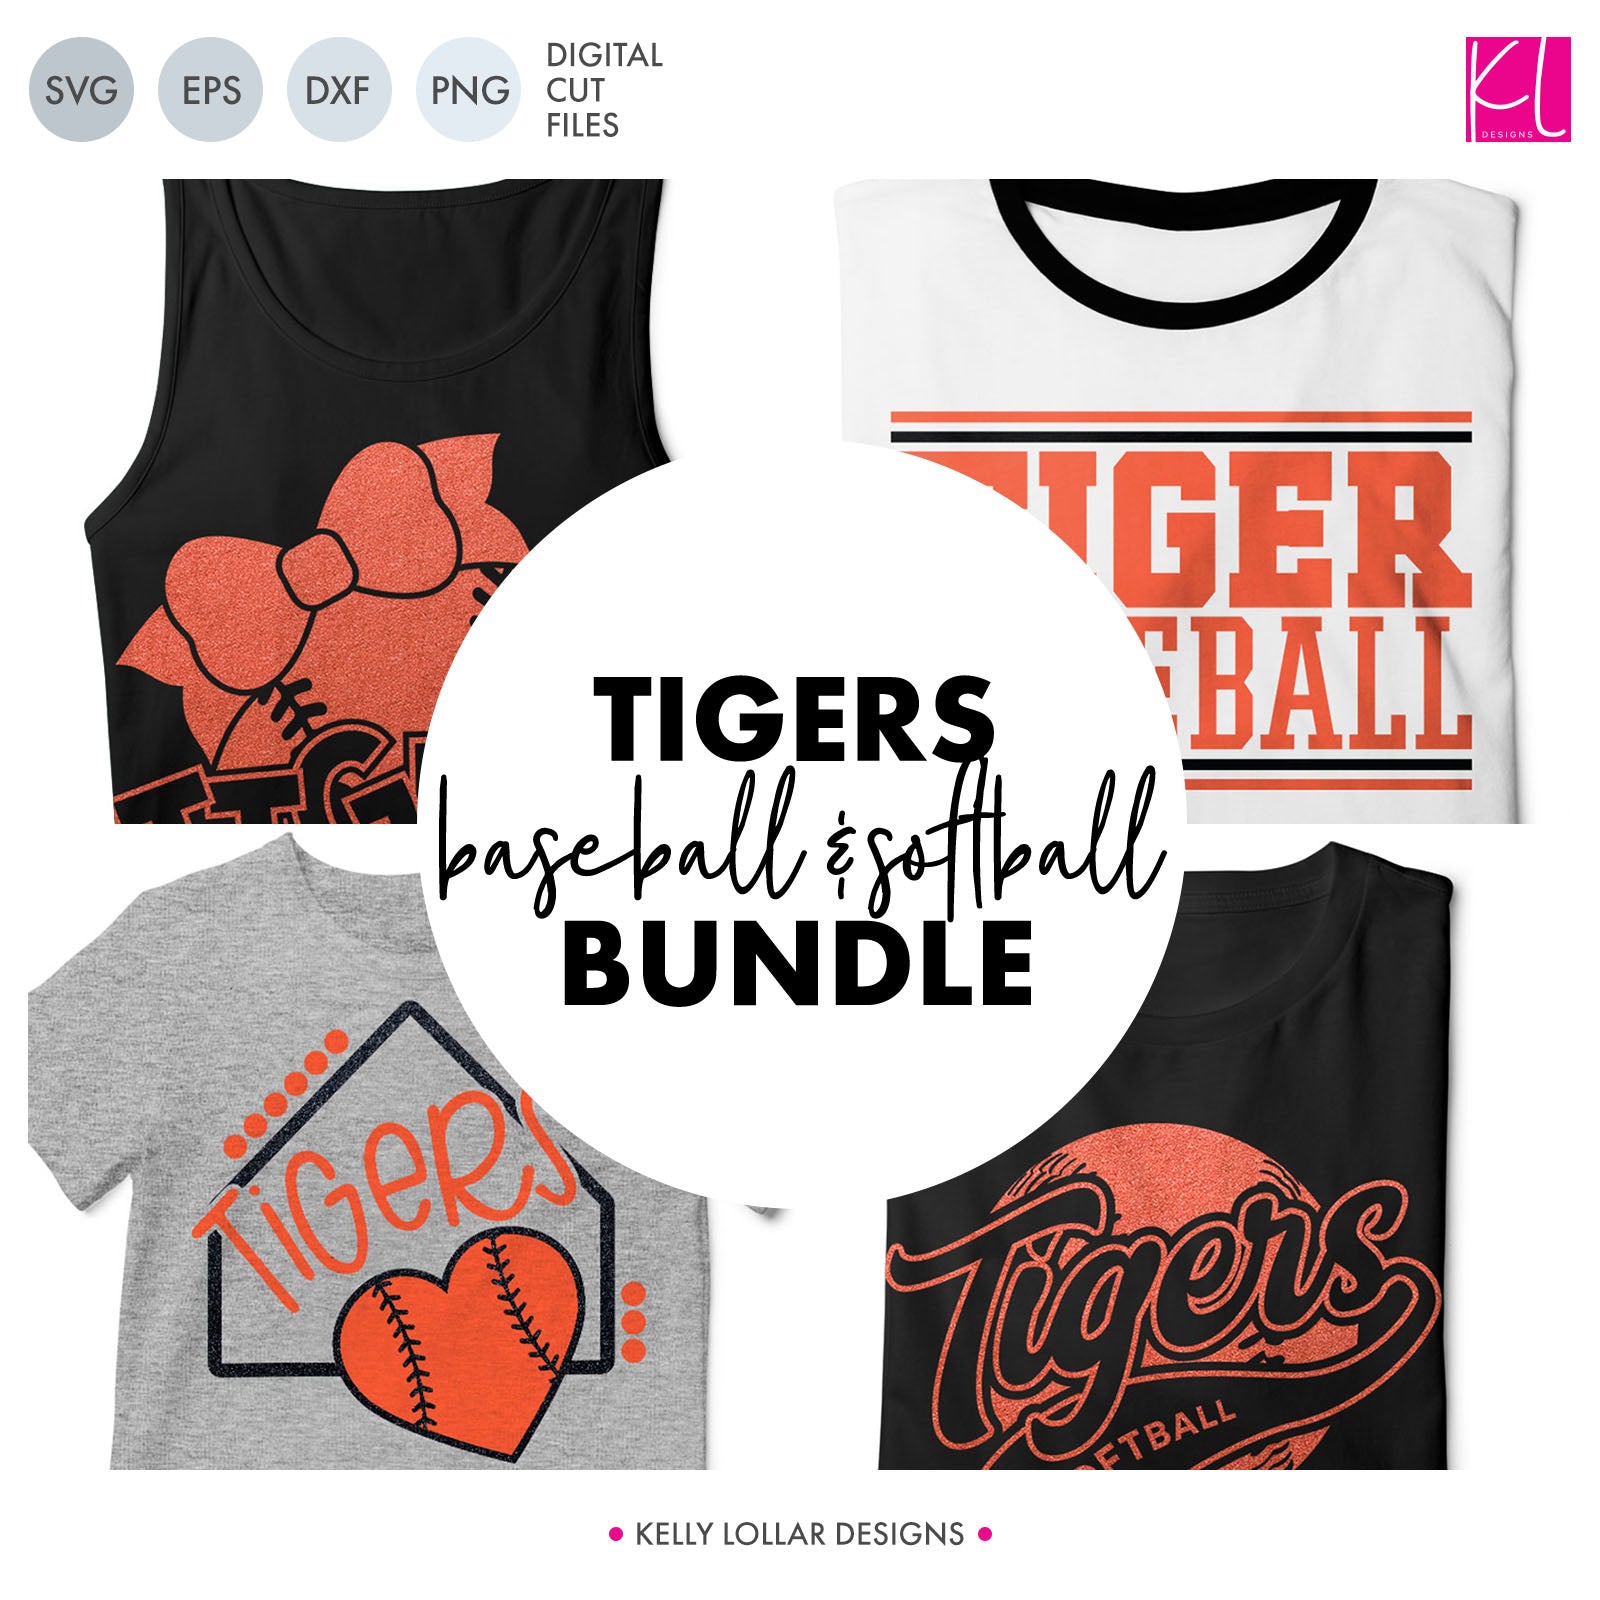 Tigers Baseball Svg Dxf eps Baseball Laces Download File Silhouette Studio  Softball svg Digital Vinyl Cut File Cricut Tigers svg